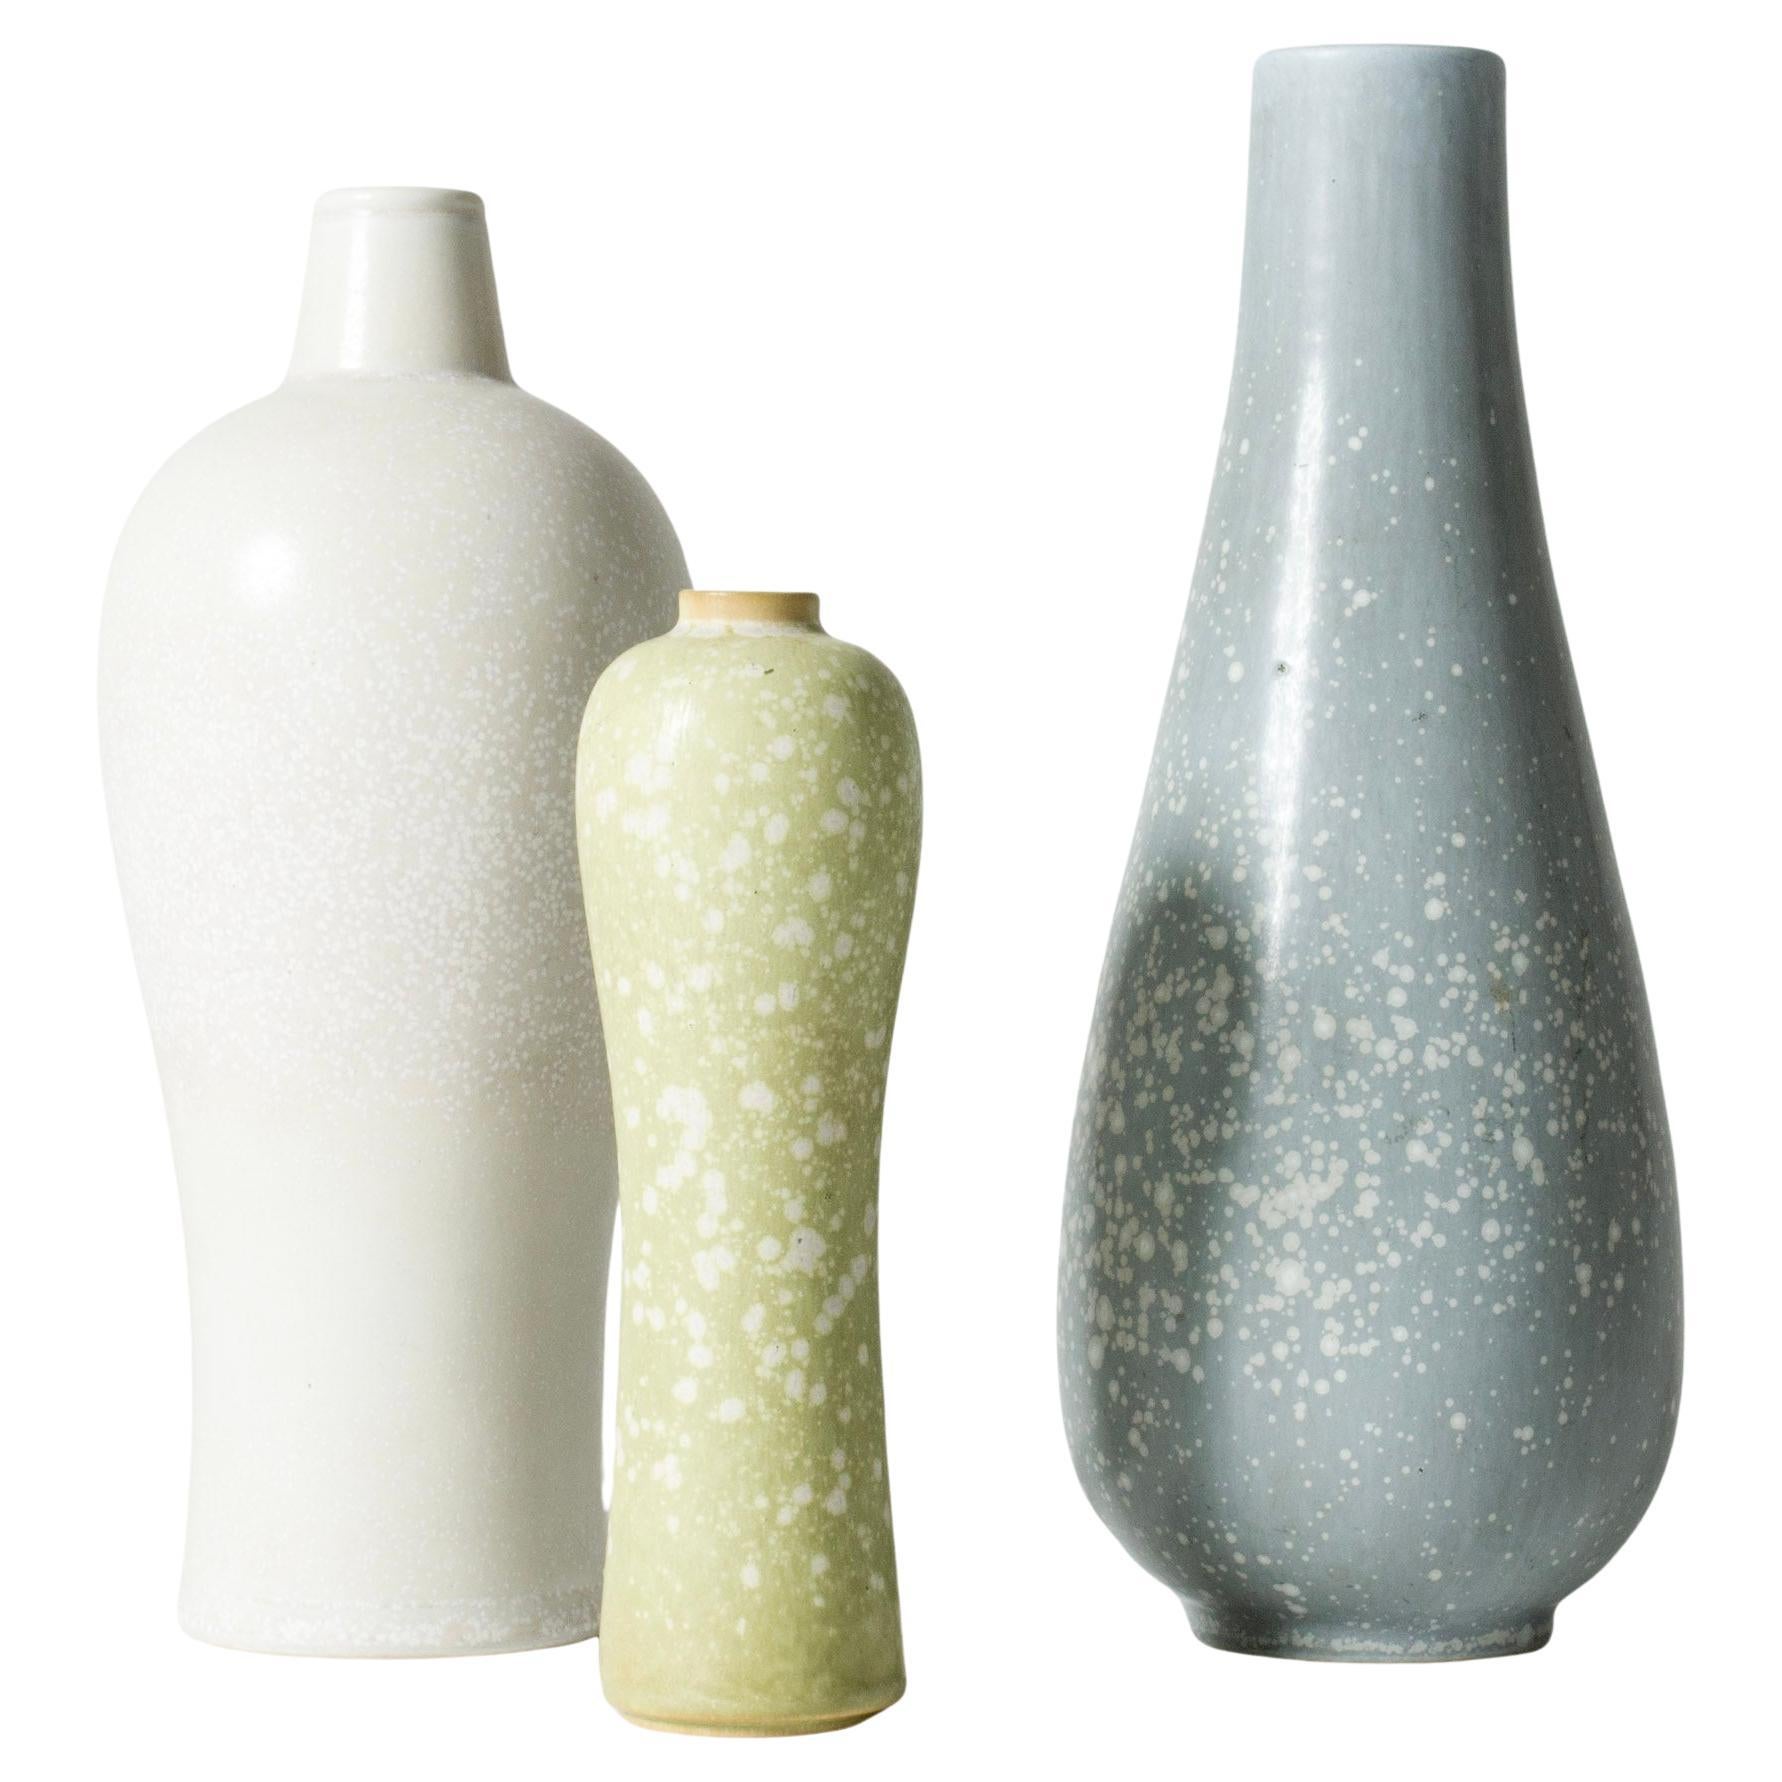 Three Modernist Stoneware Vases by Gunnar Nylund for Rörstrand, Sweden, 1940s For Sale